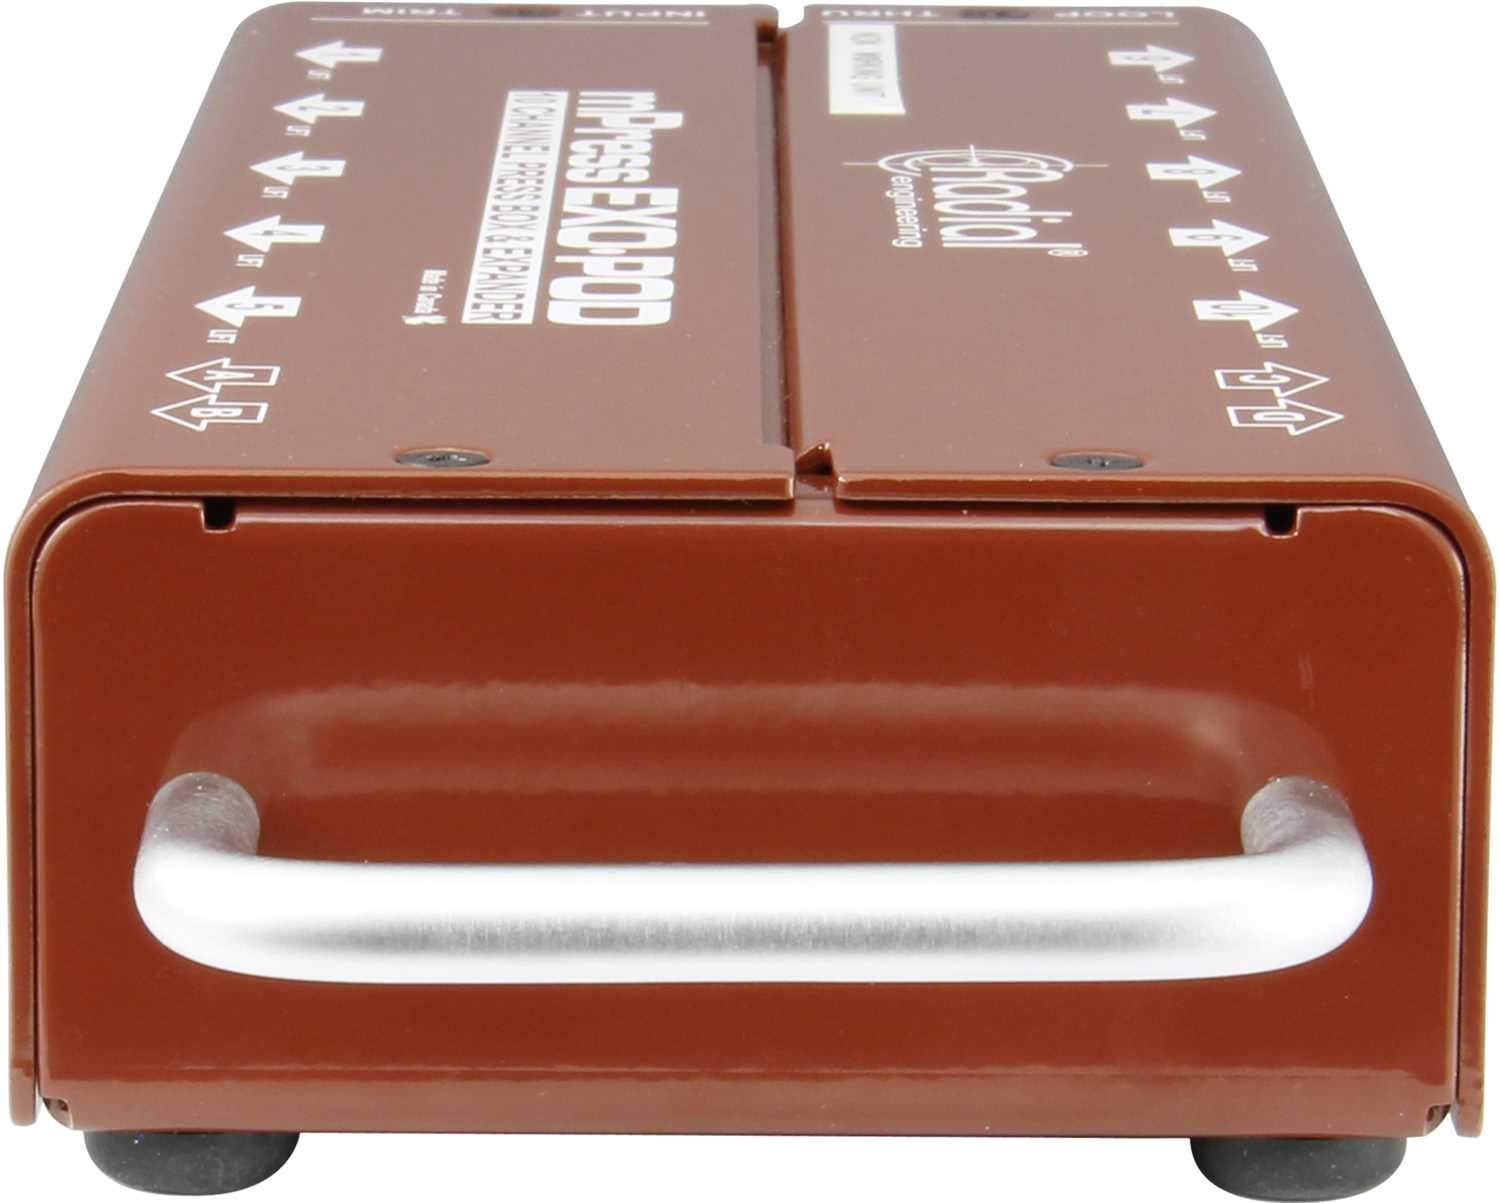 Radial Exo-Pod Press-box Expander Floorbox - ProSound and Stage Lighting